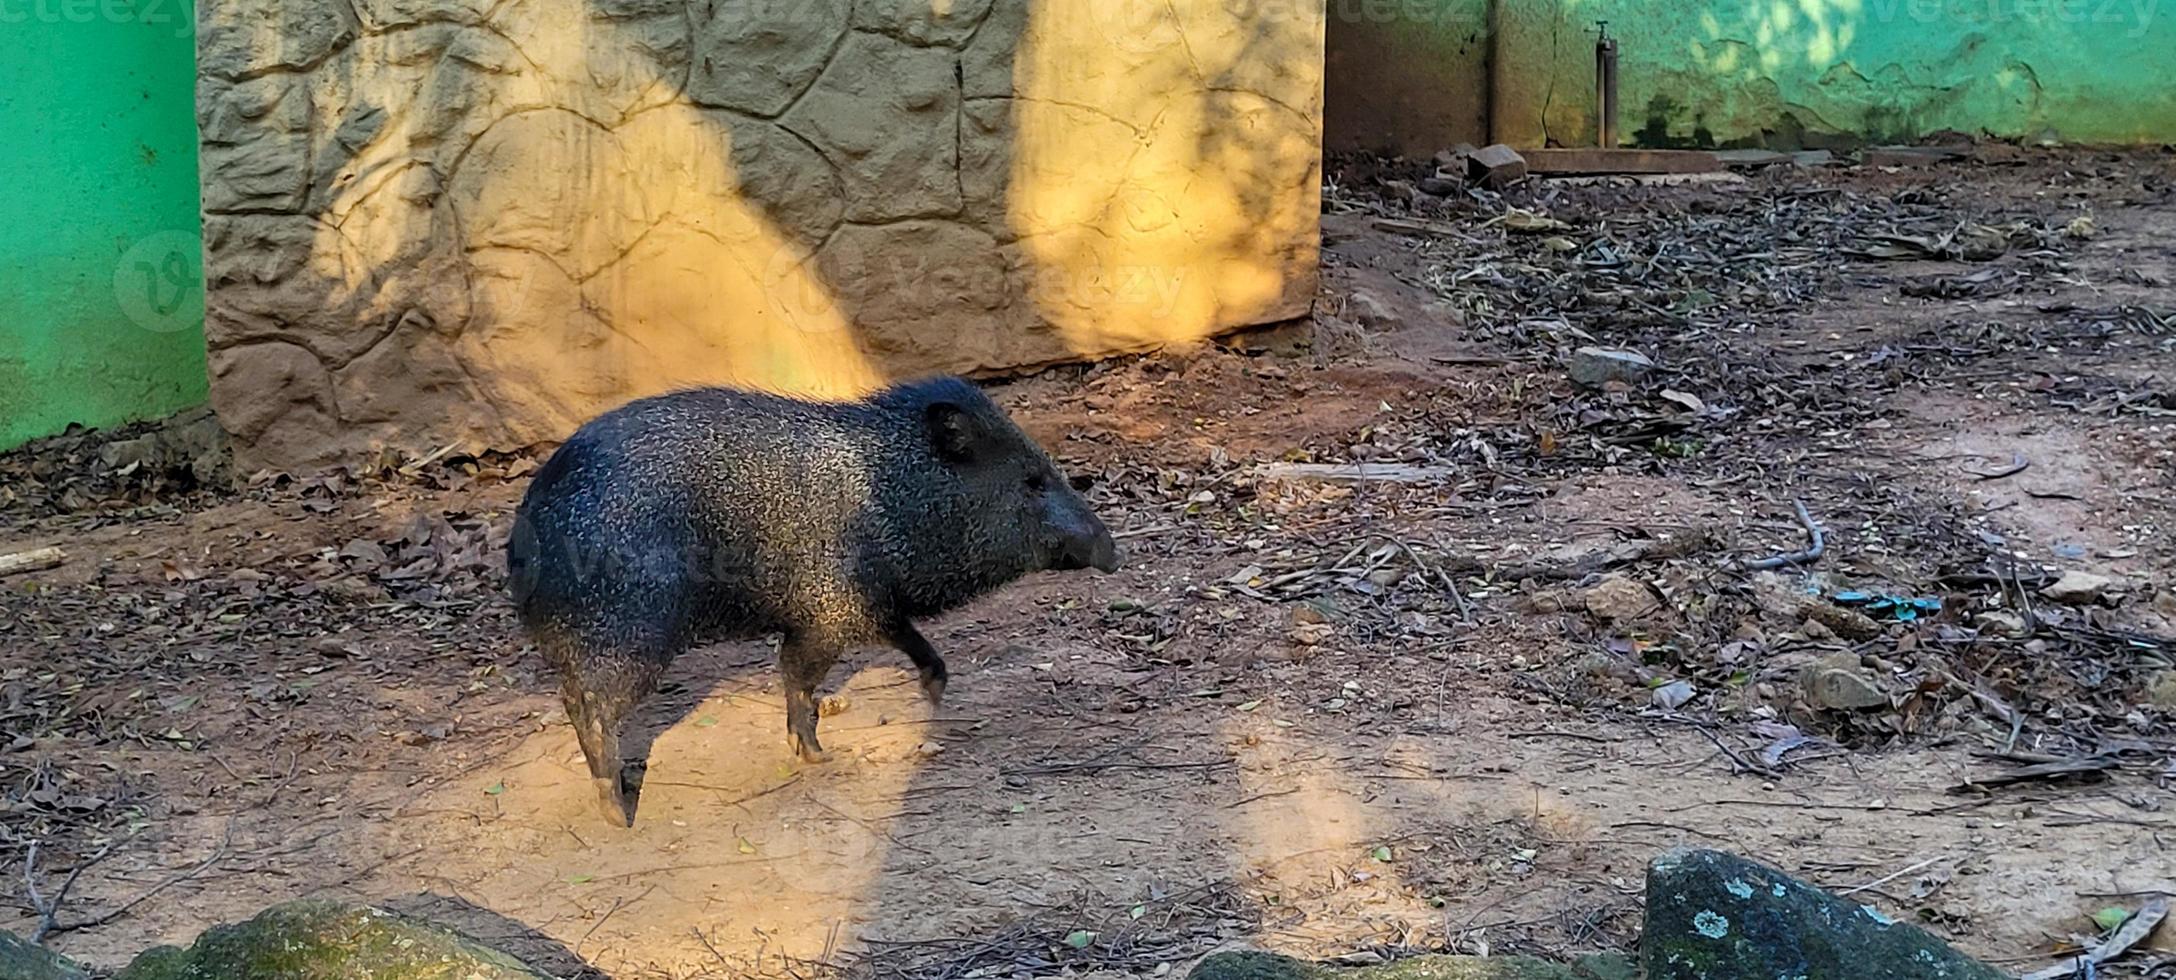 Brazilian wild pig known as peccary photo